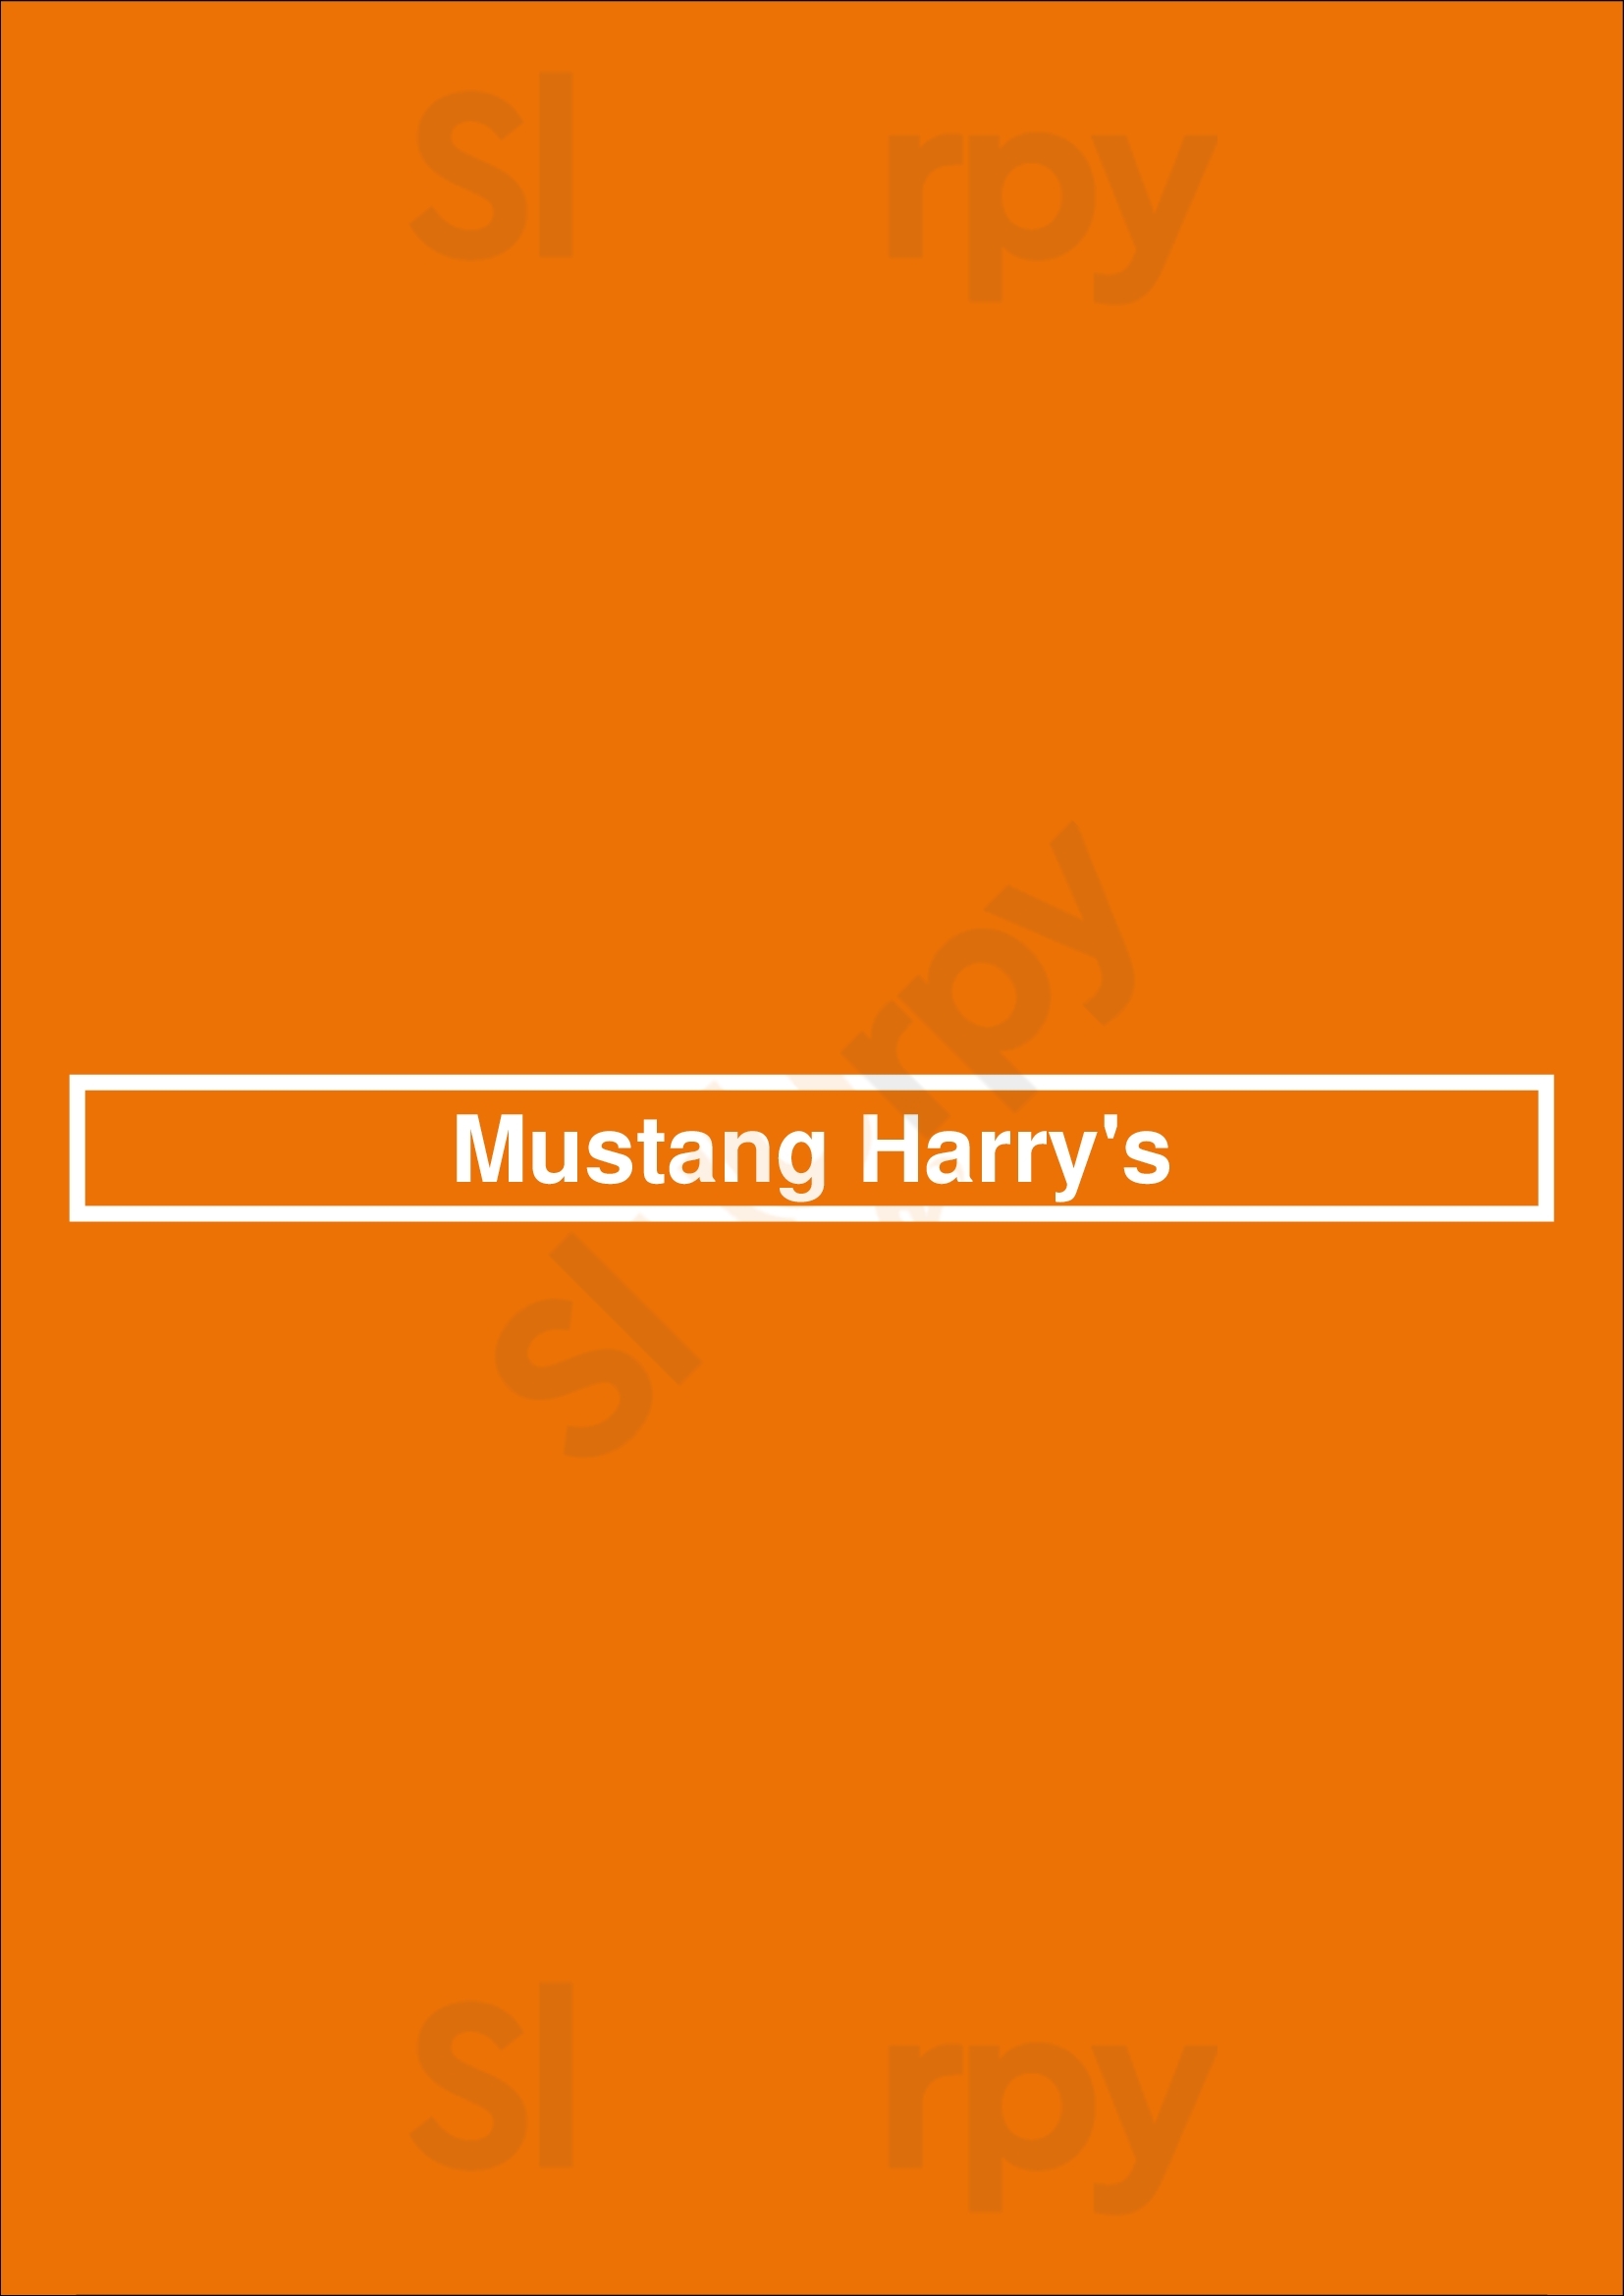 Mustang Harry's New York City Menu - 1